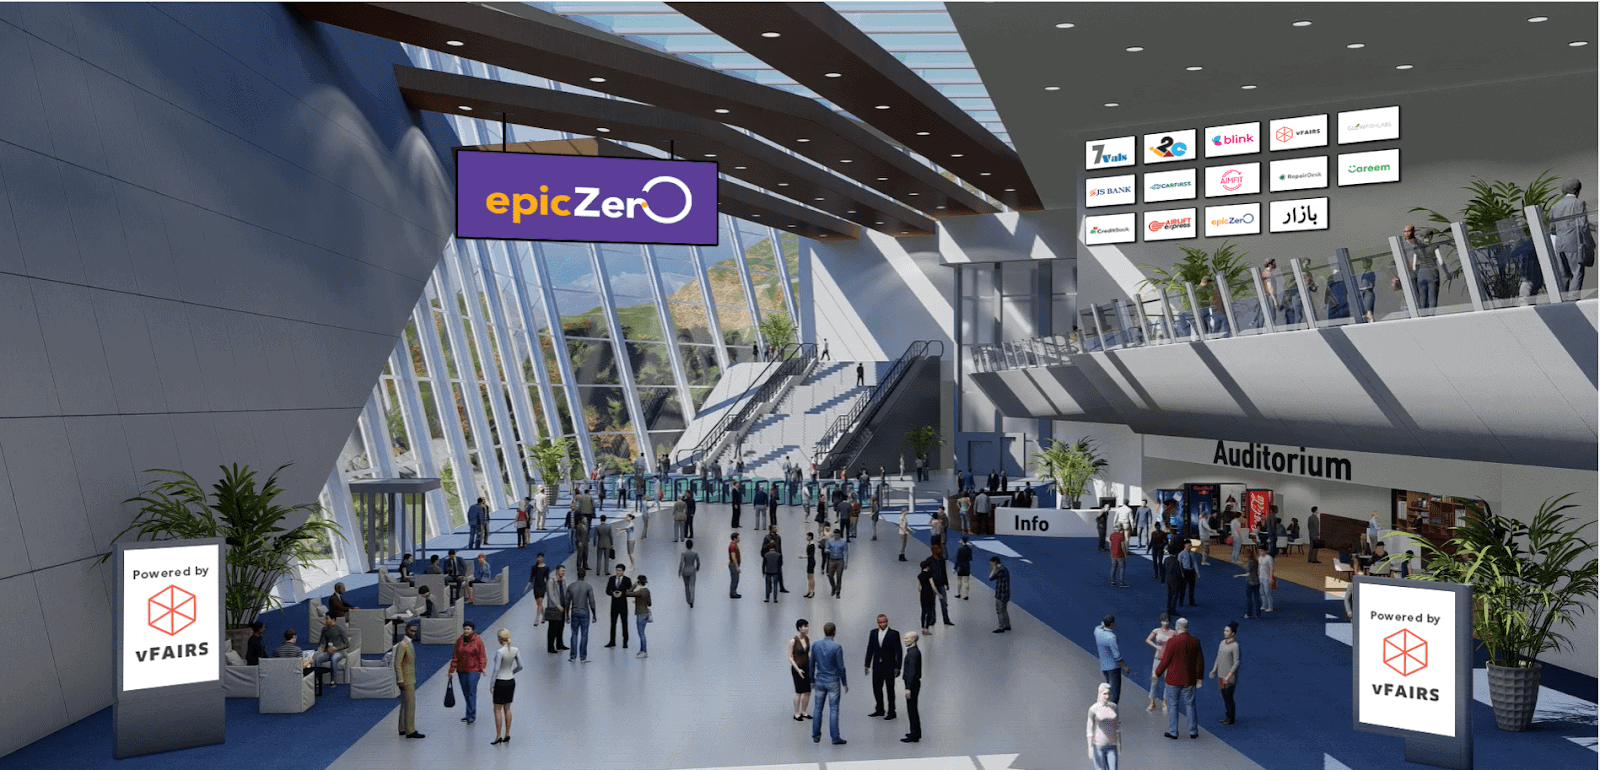 epiczero hybrid event virtual lobby